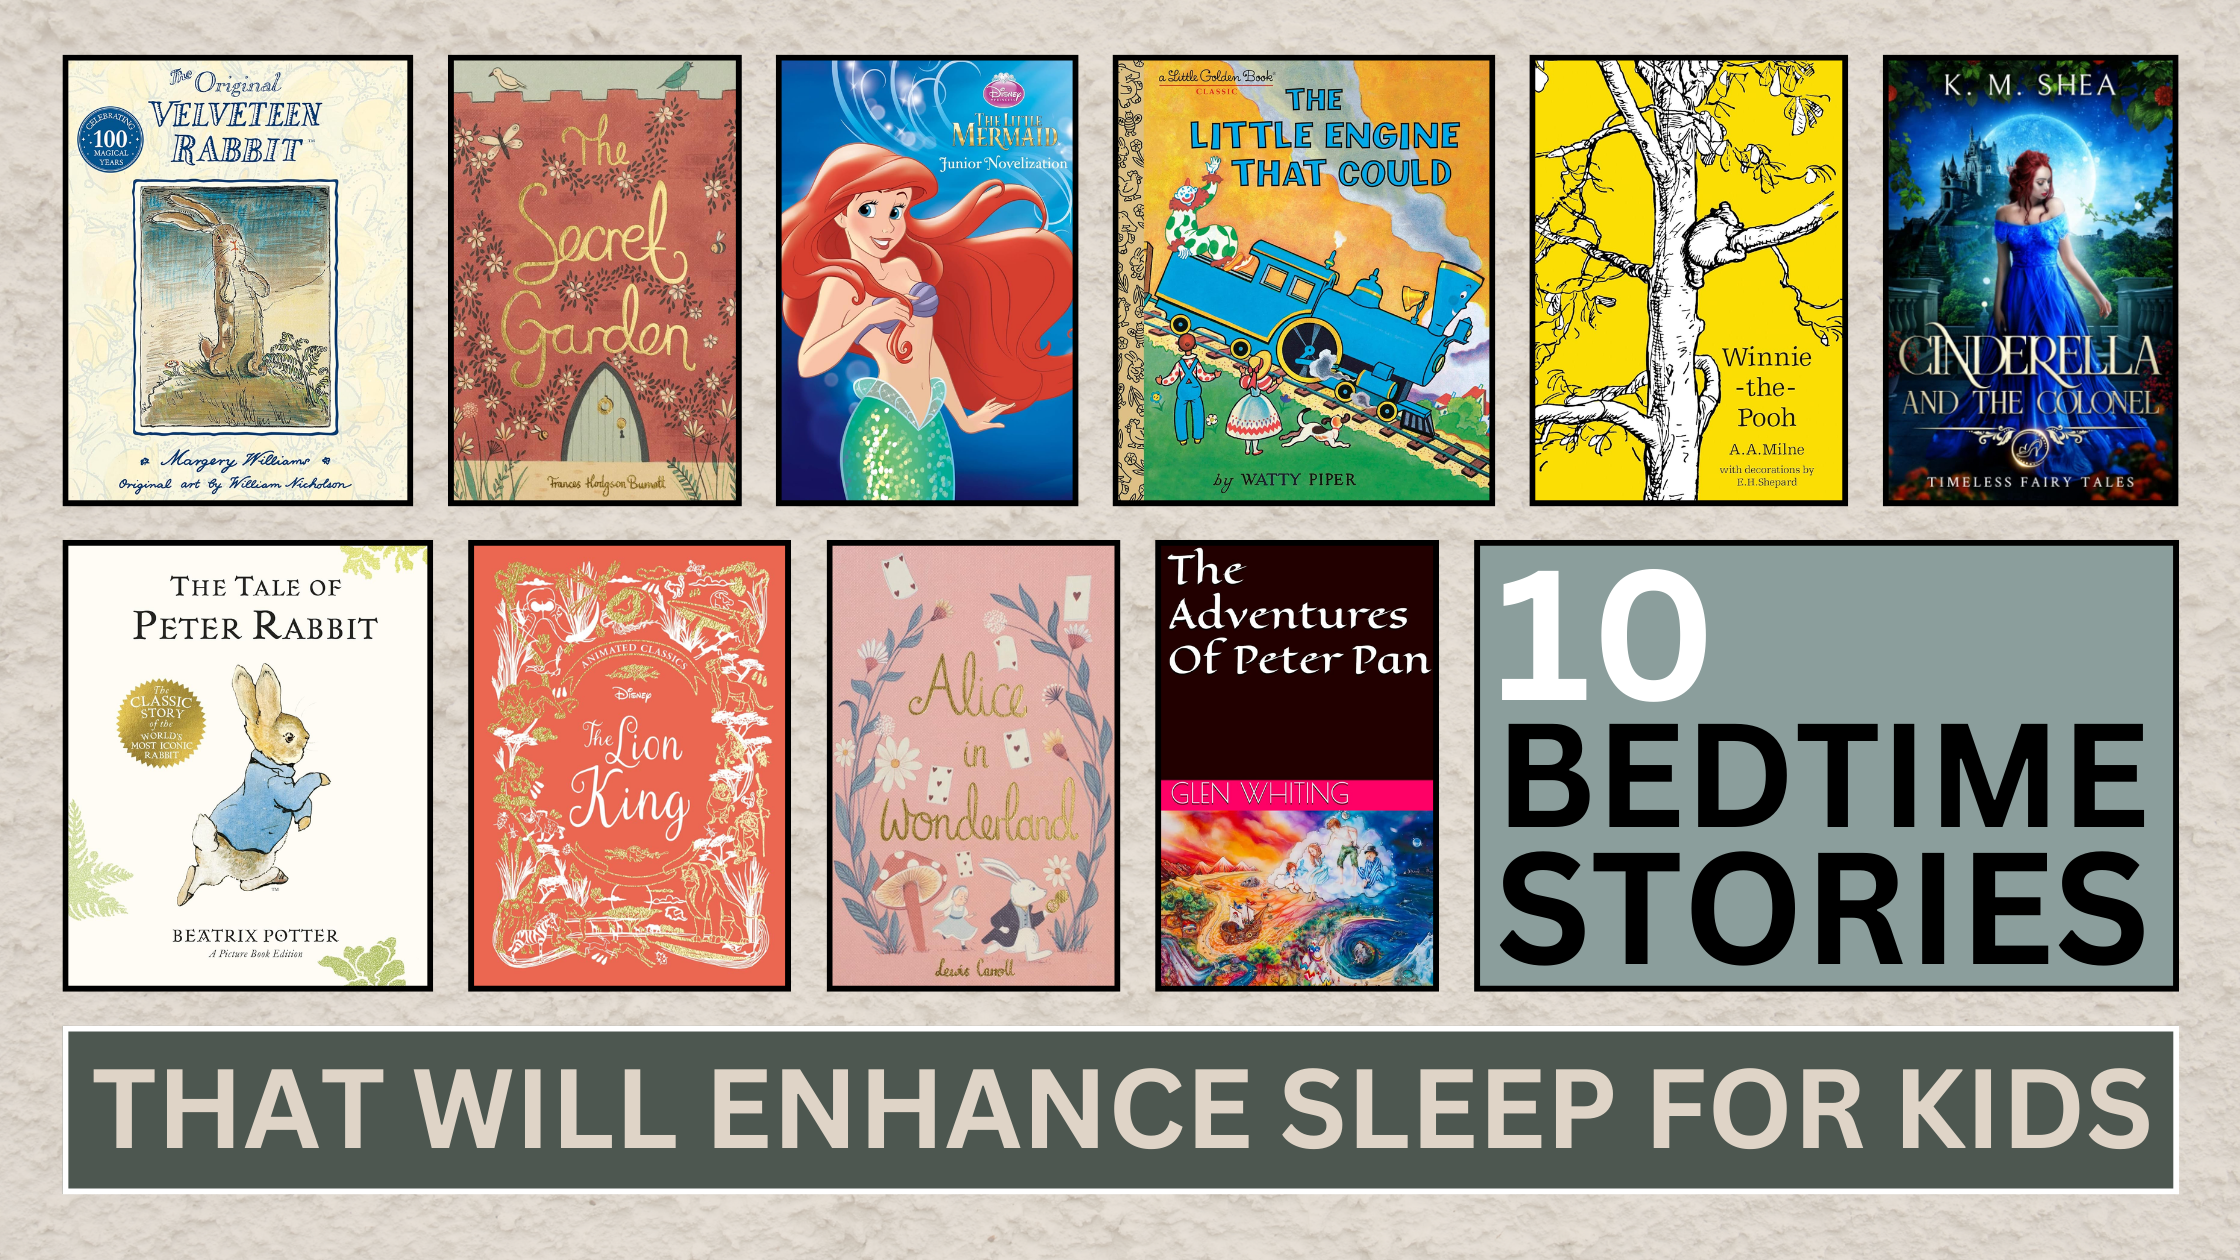 10 Bedtime Stories that will enhance sleep for kids!